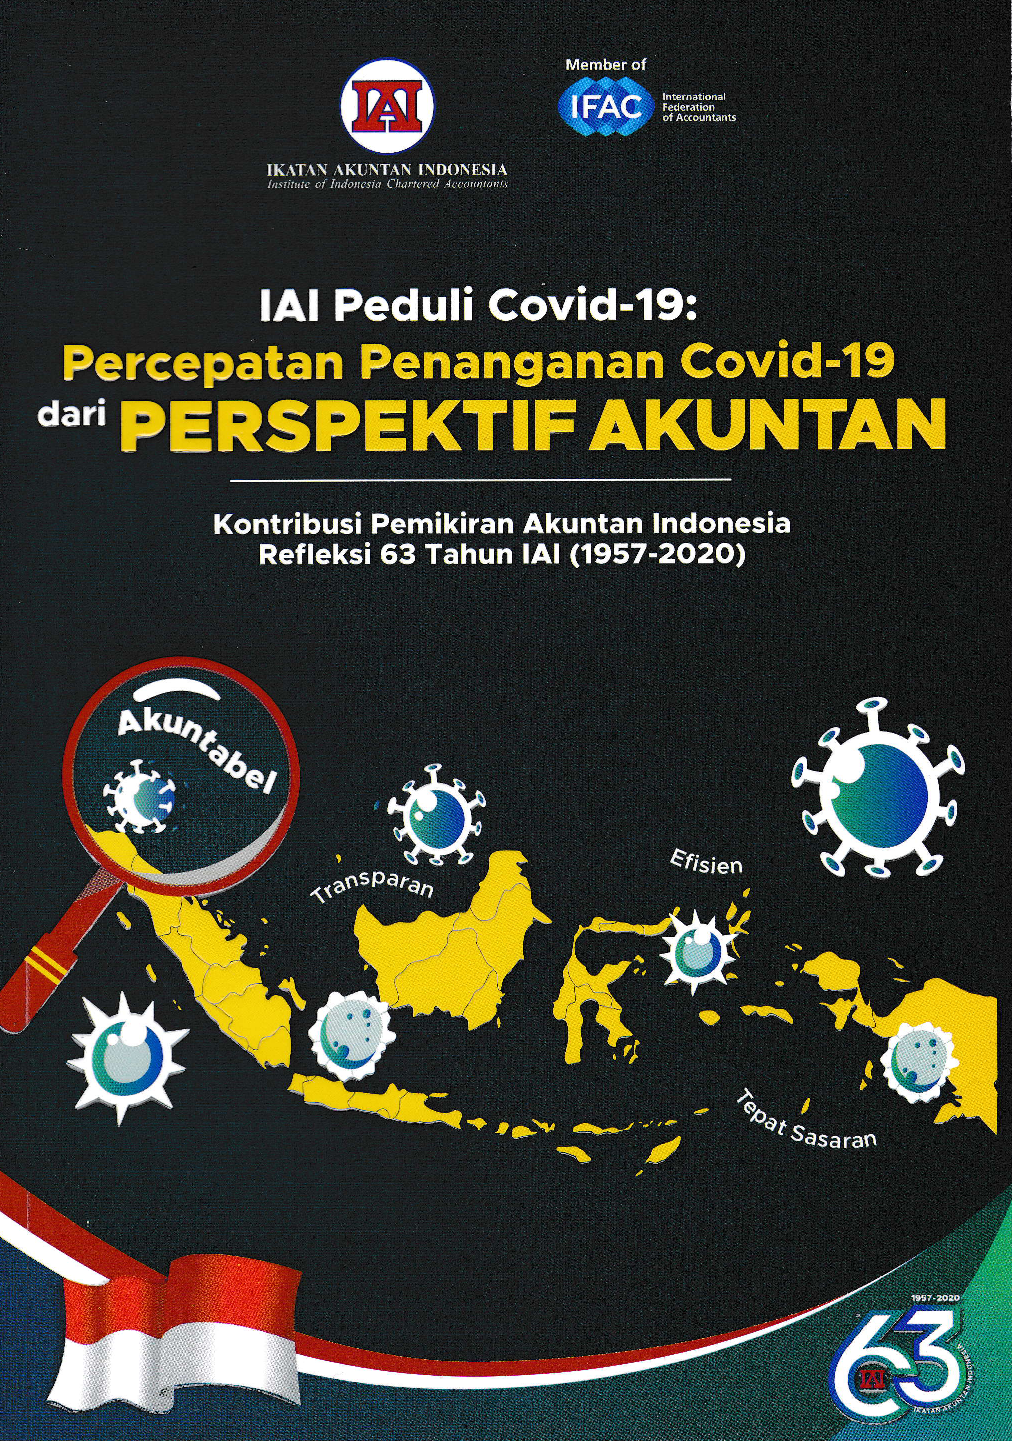 IAI PEDULI COVID-19 PERCEPATAN PENANGANAN COVID-19 DARI PERSPEKTIF AKUNTAN : Kontribusi Pemikiran Akuntan Indonesia Refleksi 63 Tahun IAI (1957-2020)